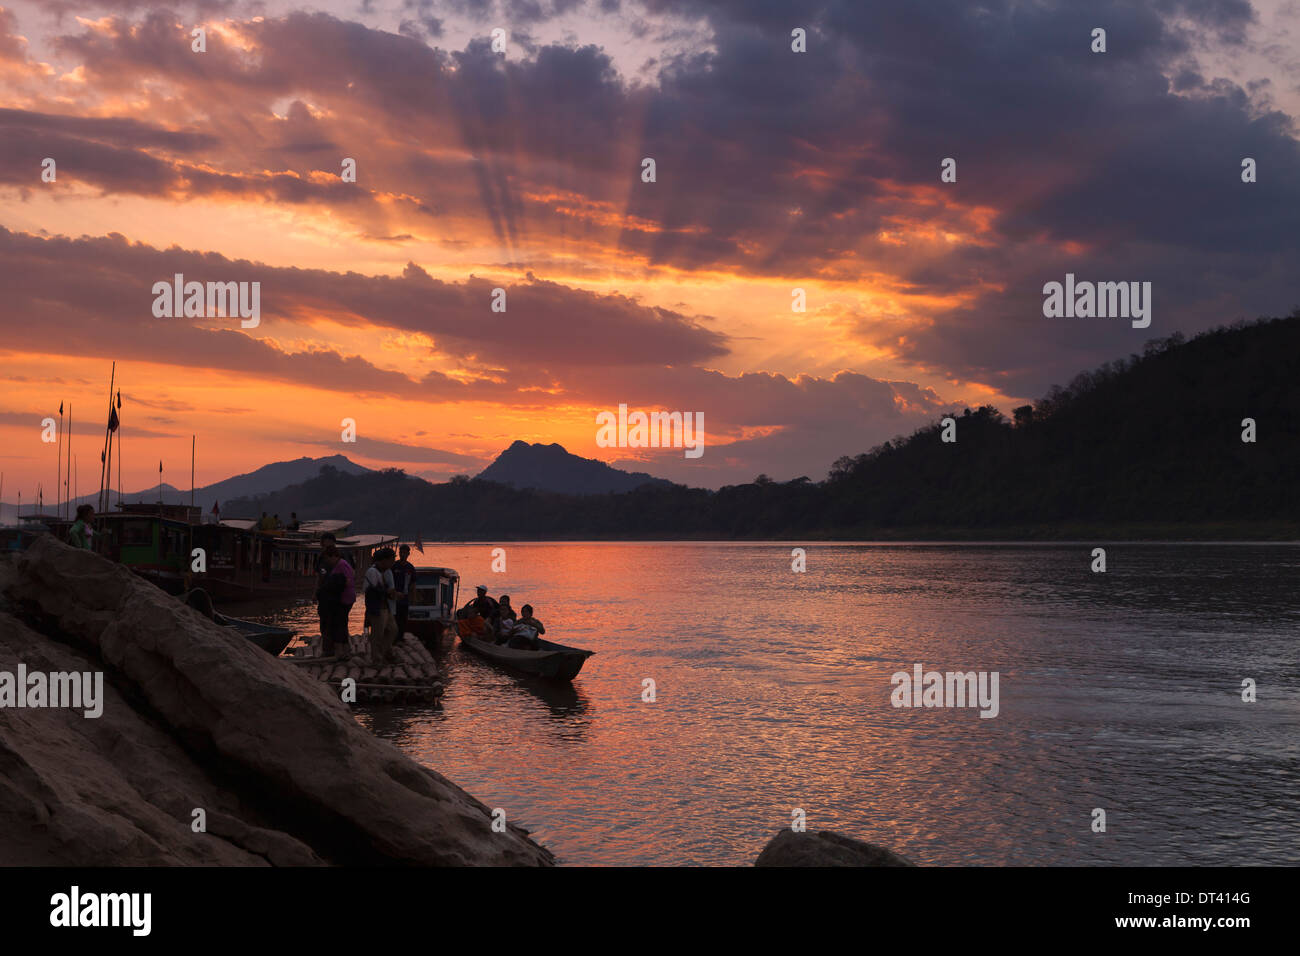 Dramatic sunset view over the Mekong in Luang Prabang, Laos Stock Photo